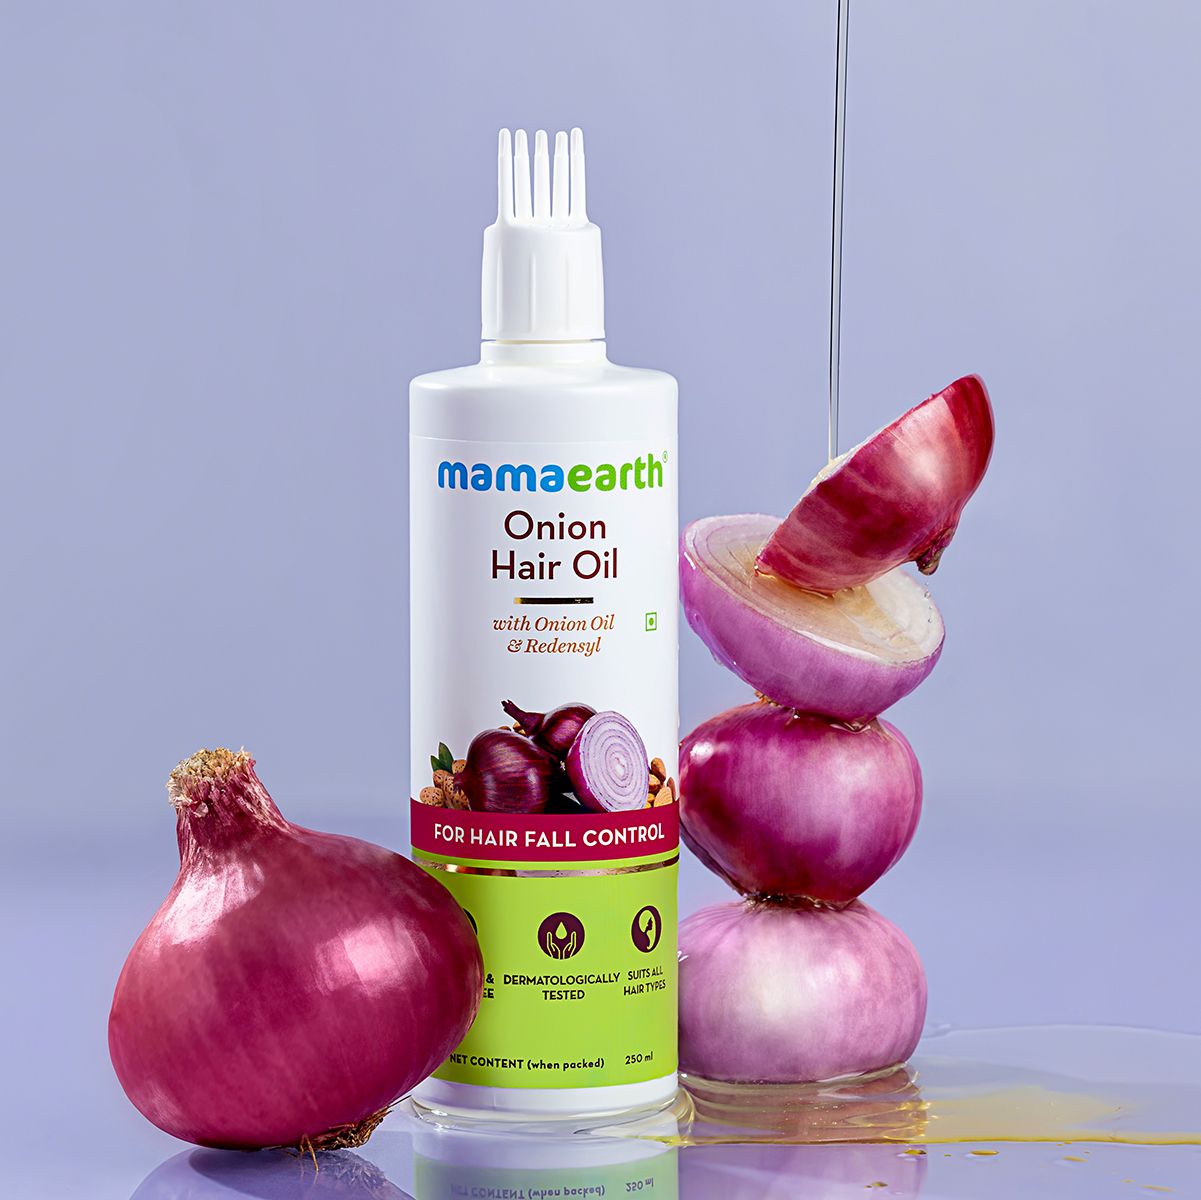 How is Mamaearth's Onion shampoo? - Quora